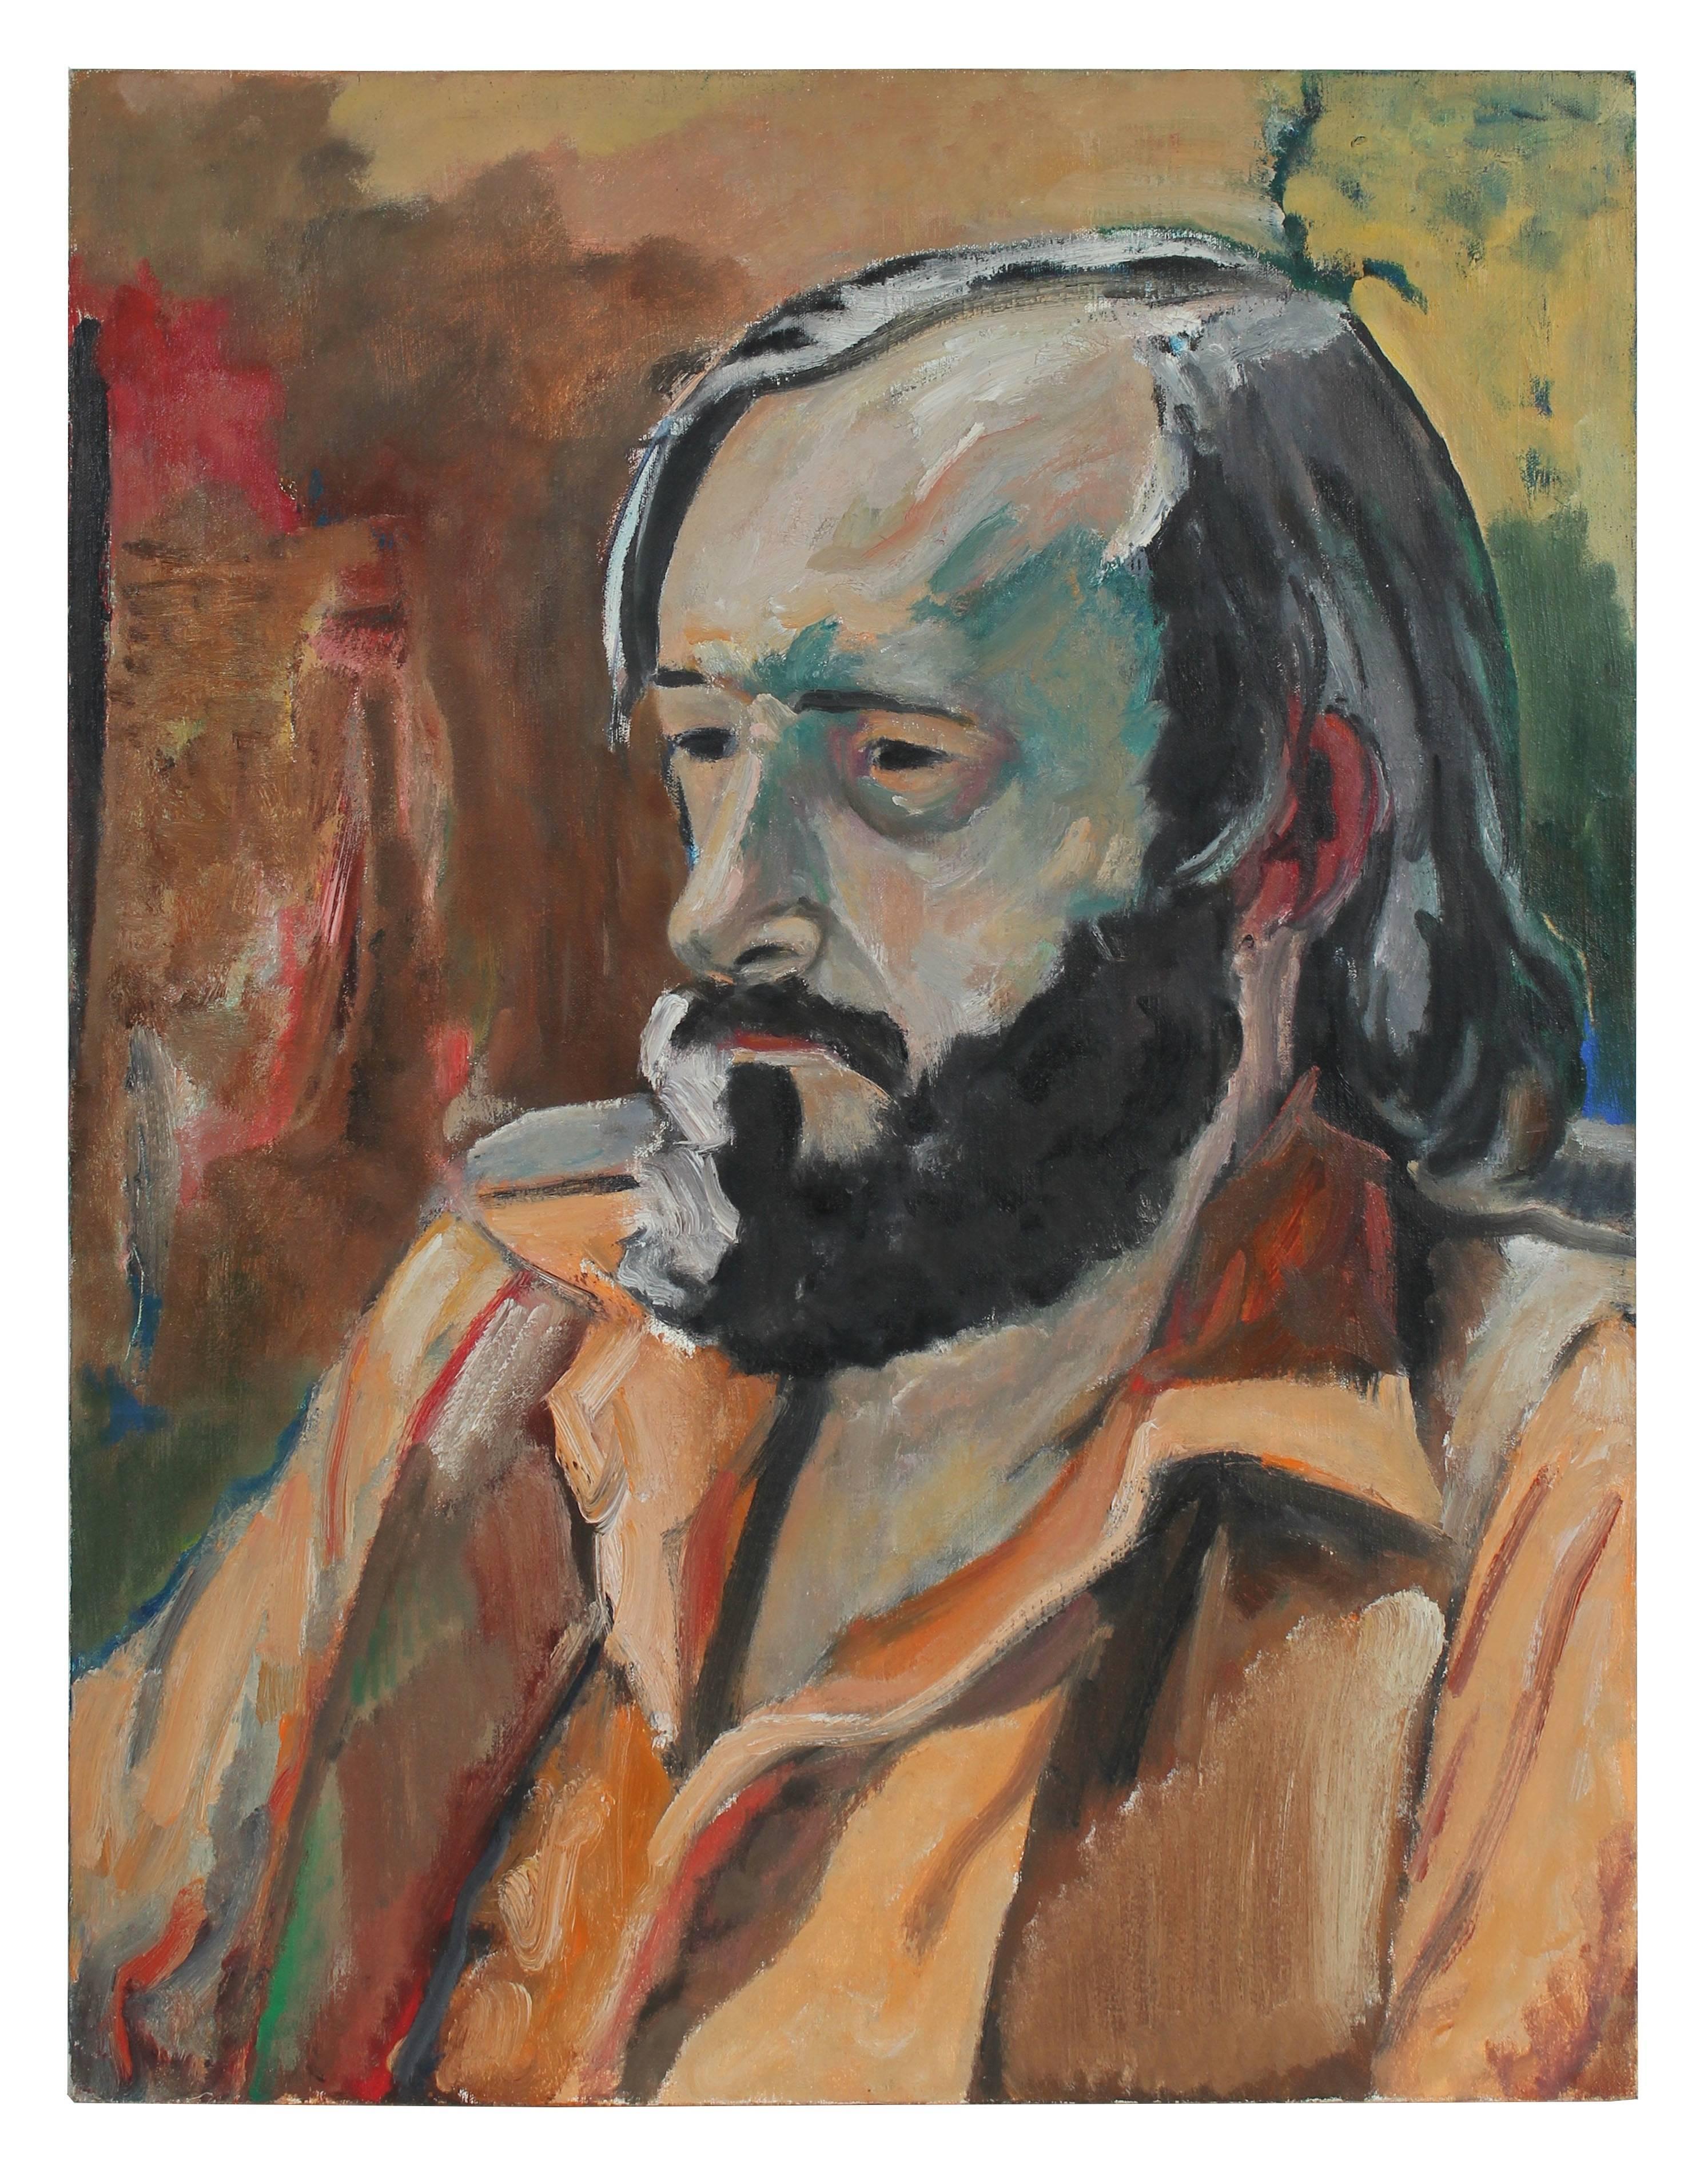 Jack Freeman Portrait Painting - "A.M. Tuggle" Modernist Portrait of a Man in Oil, 1972